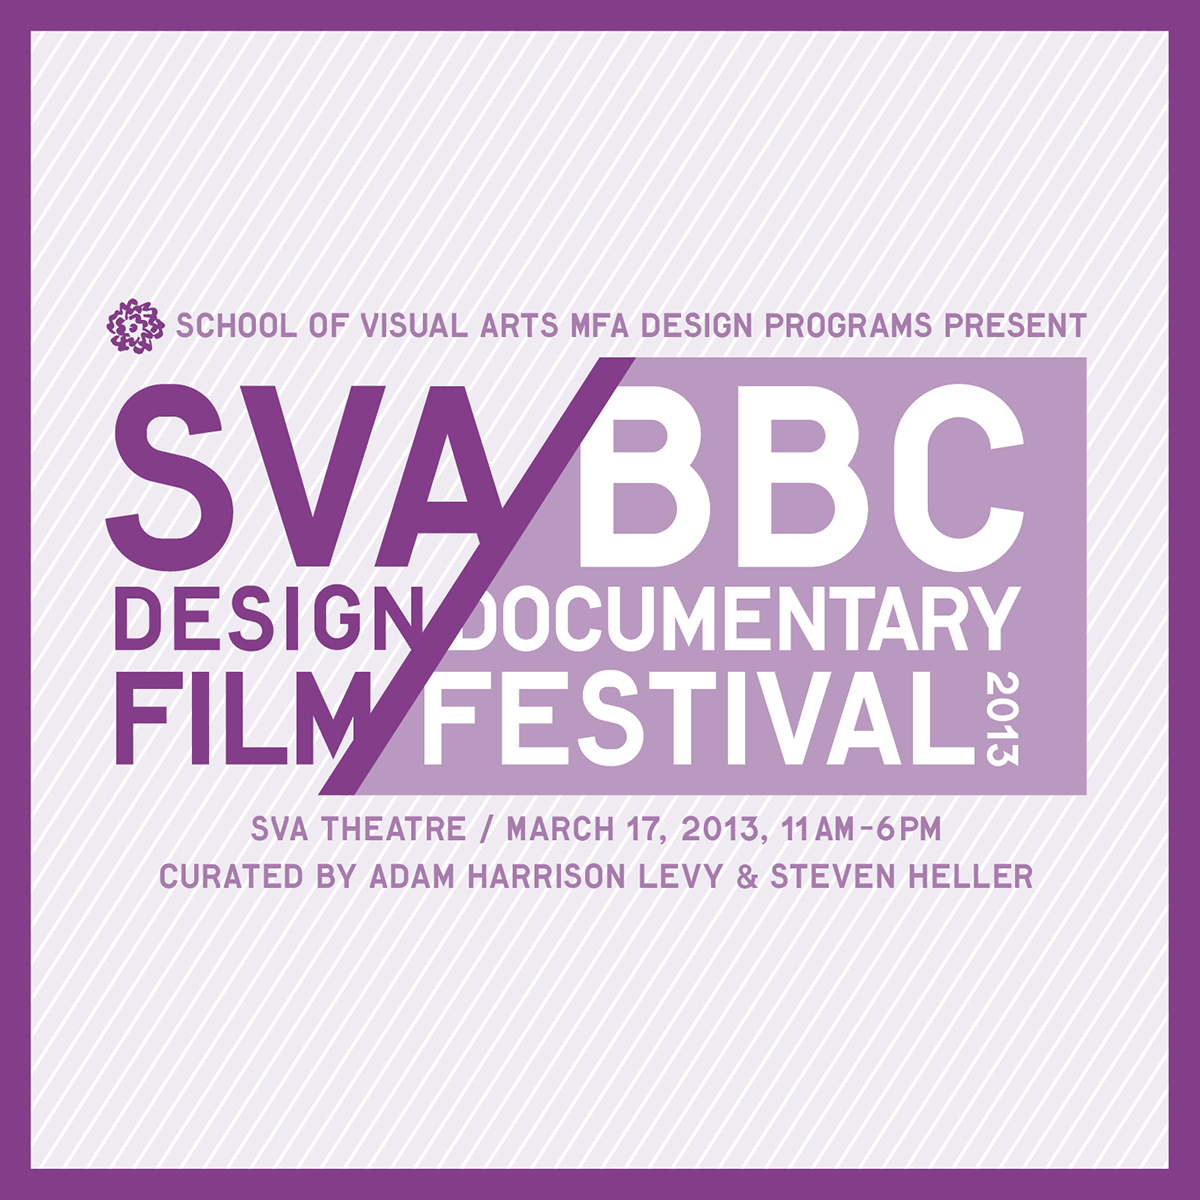 Adobe Portfolio sva SVA/BBC documentary film film festival SVA Theatre Event Branding